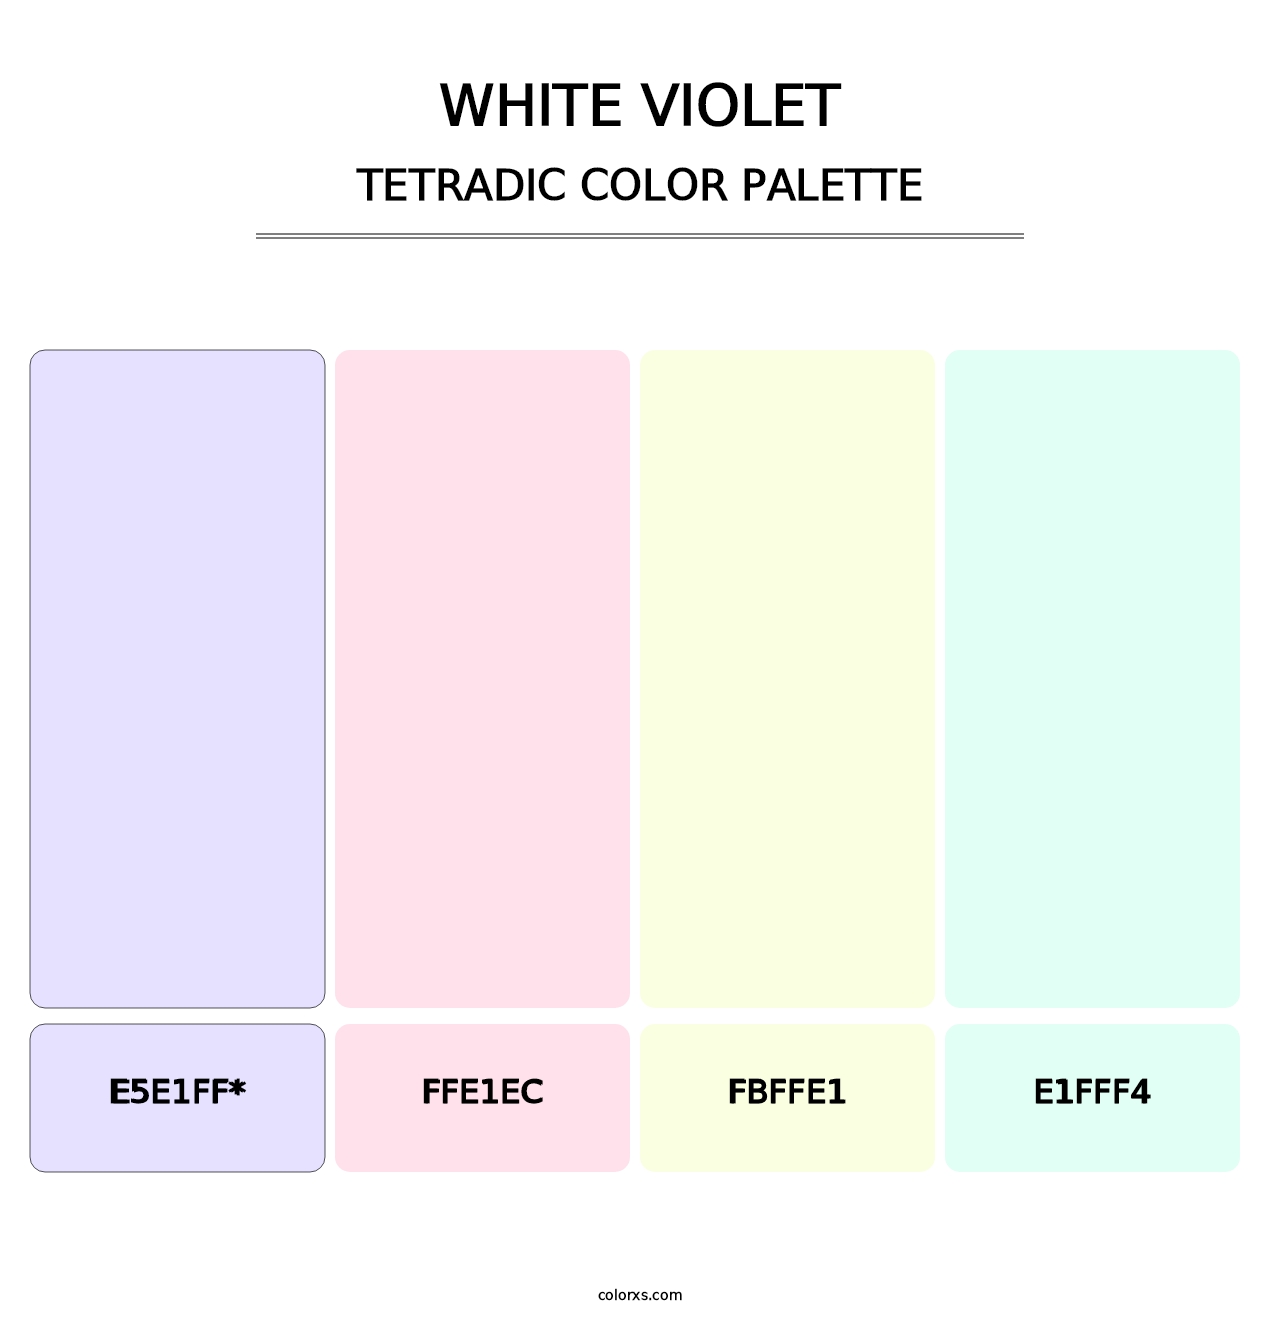 White Violet - Tetradic Color Palette